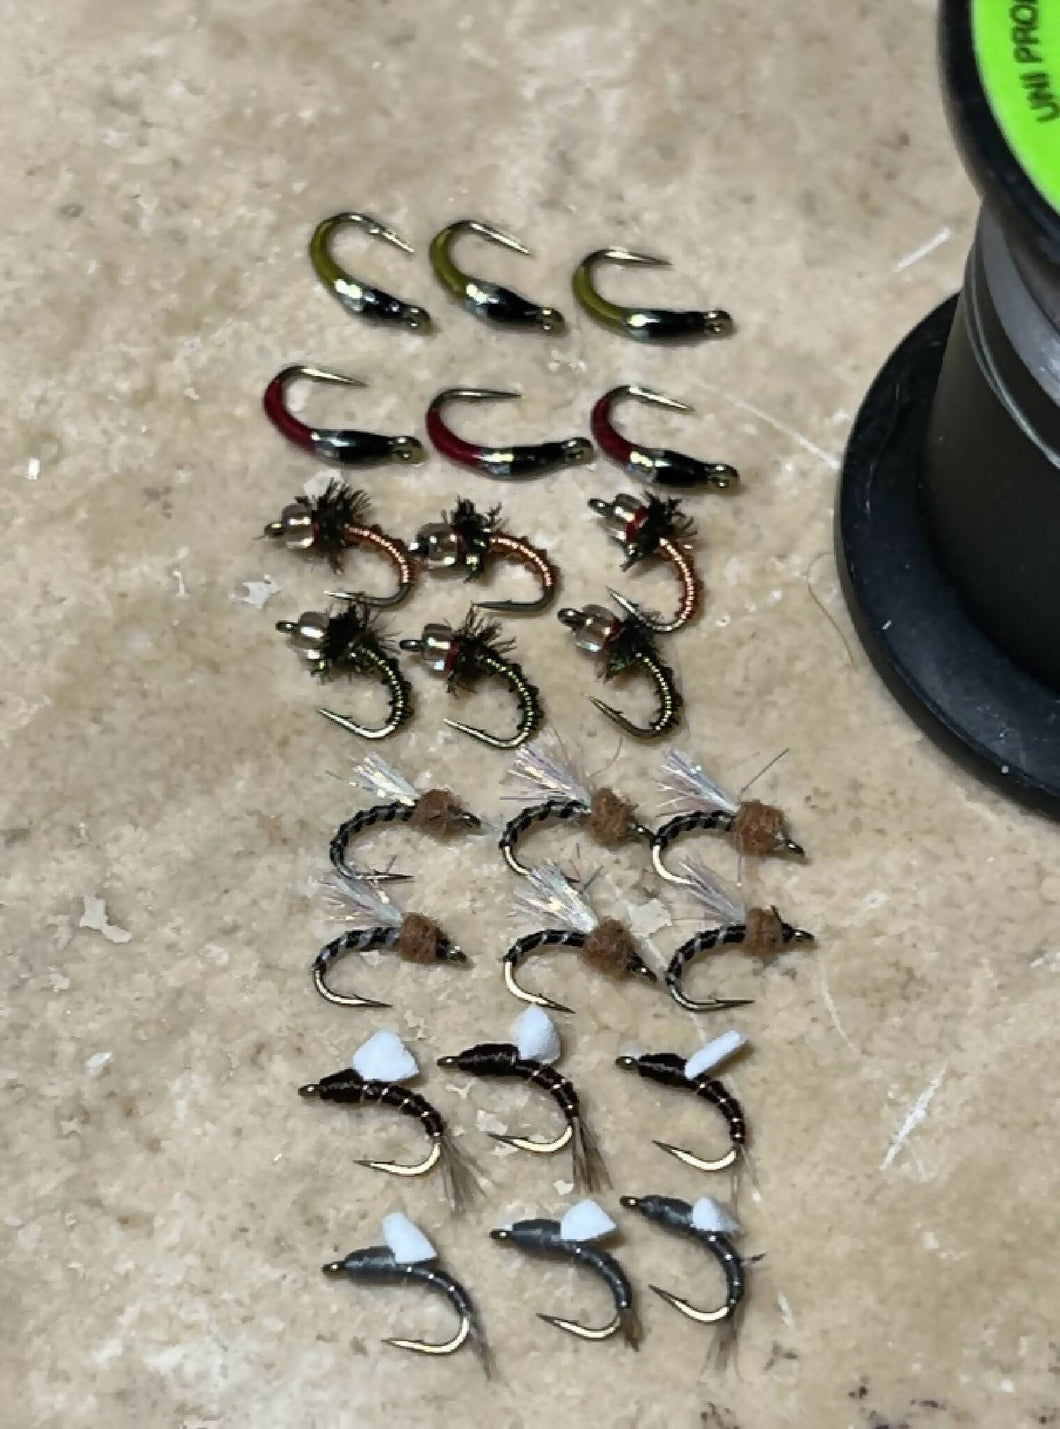 Midge pack - 2 dozen flies, 4 proven patterns!